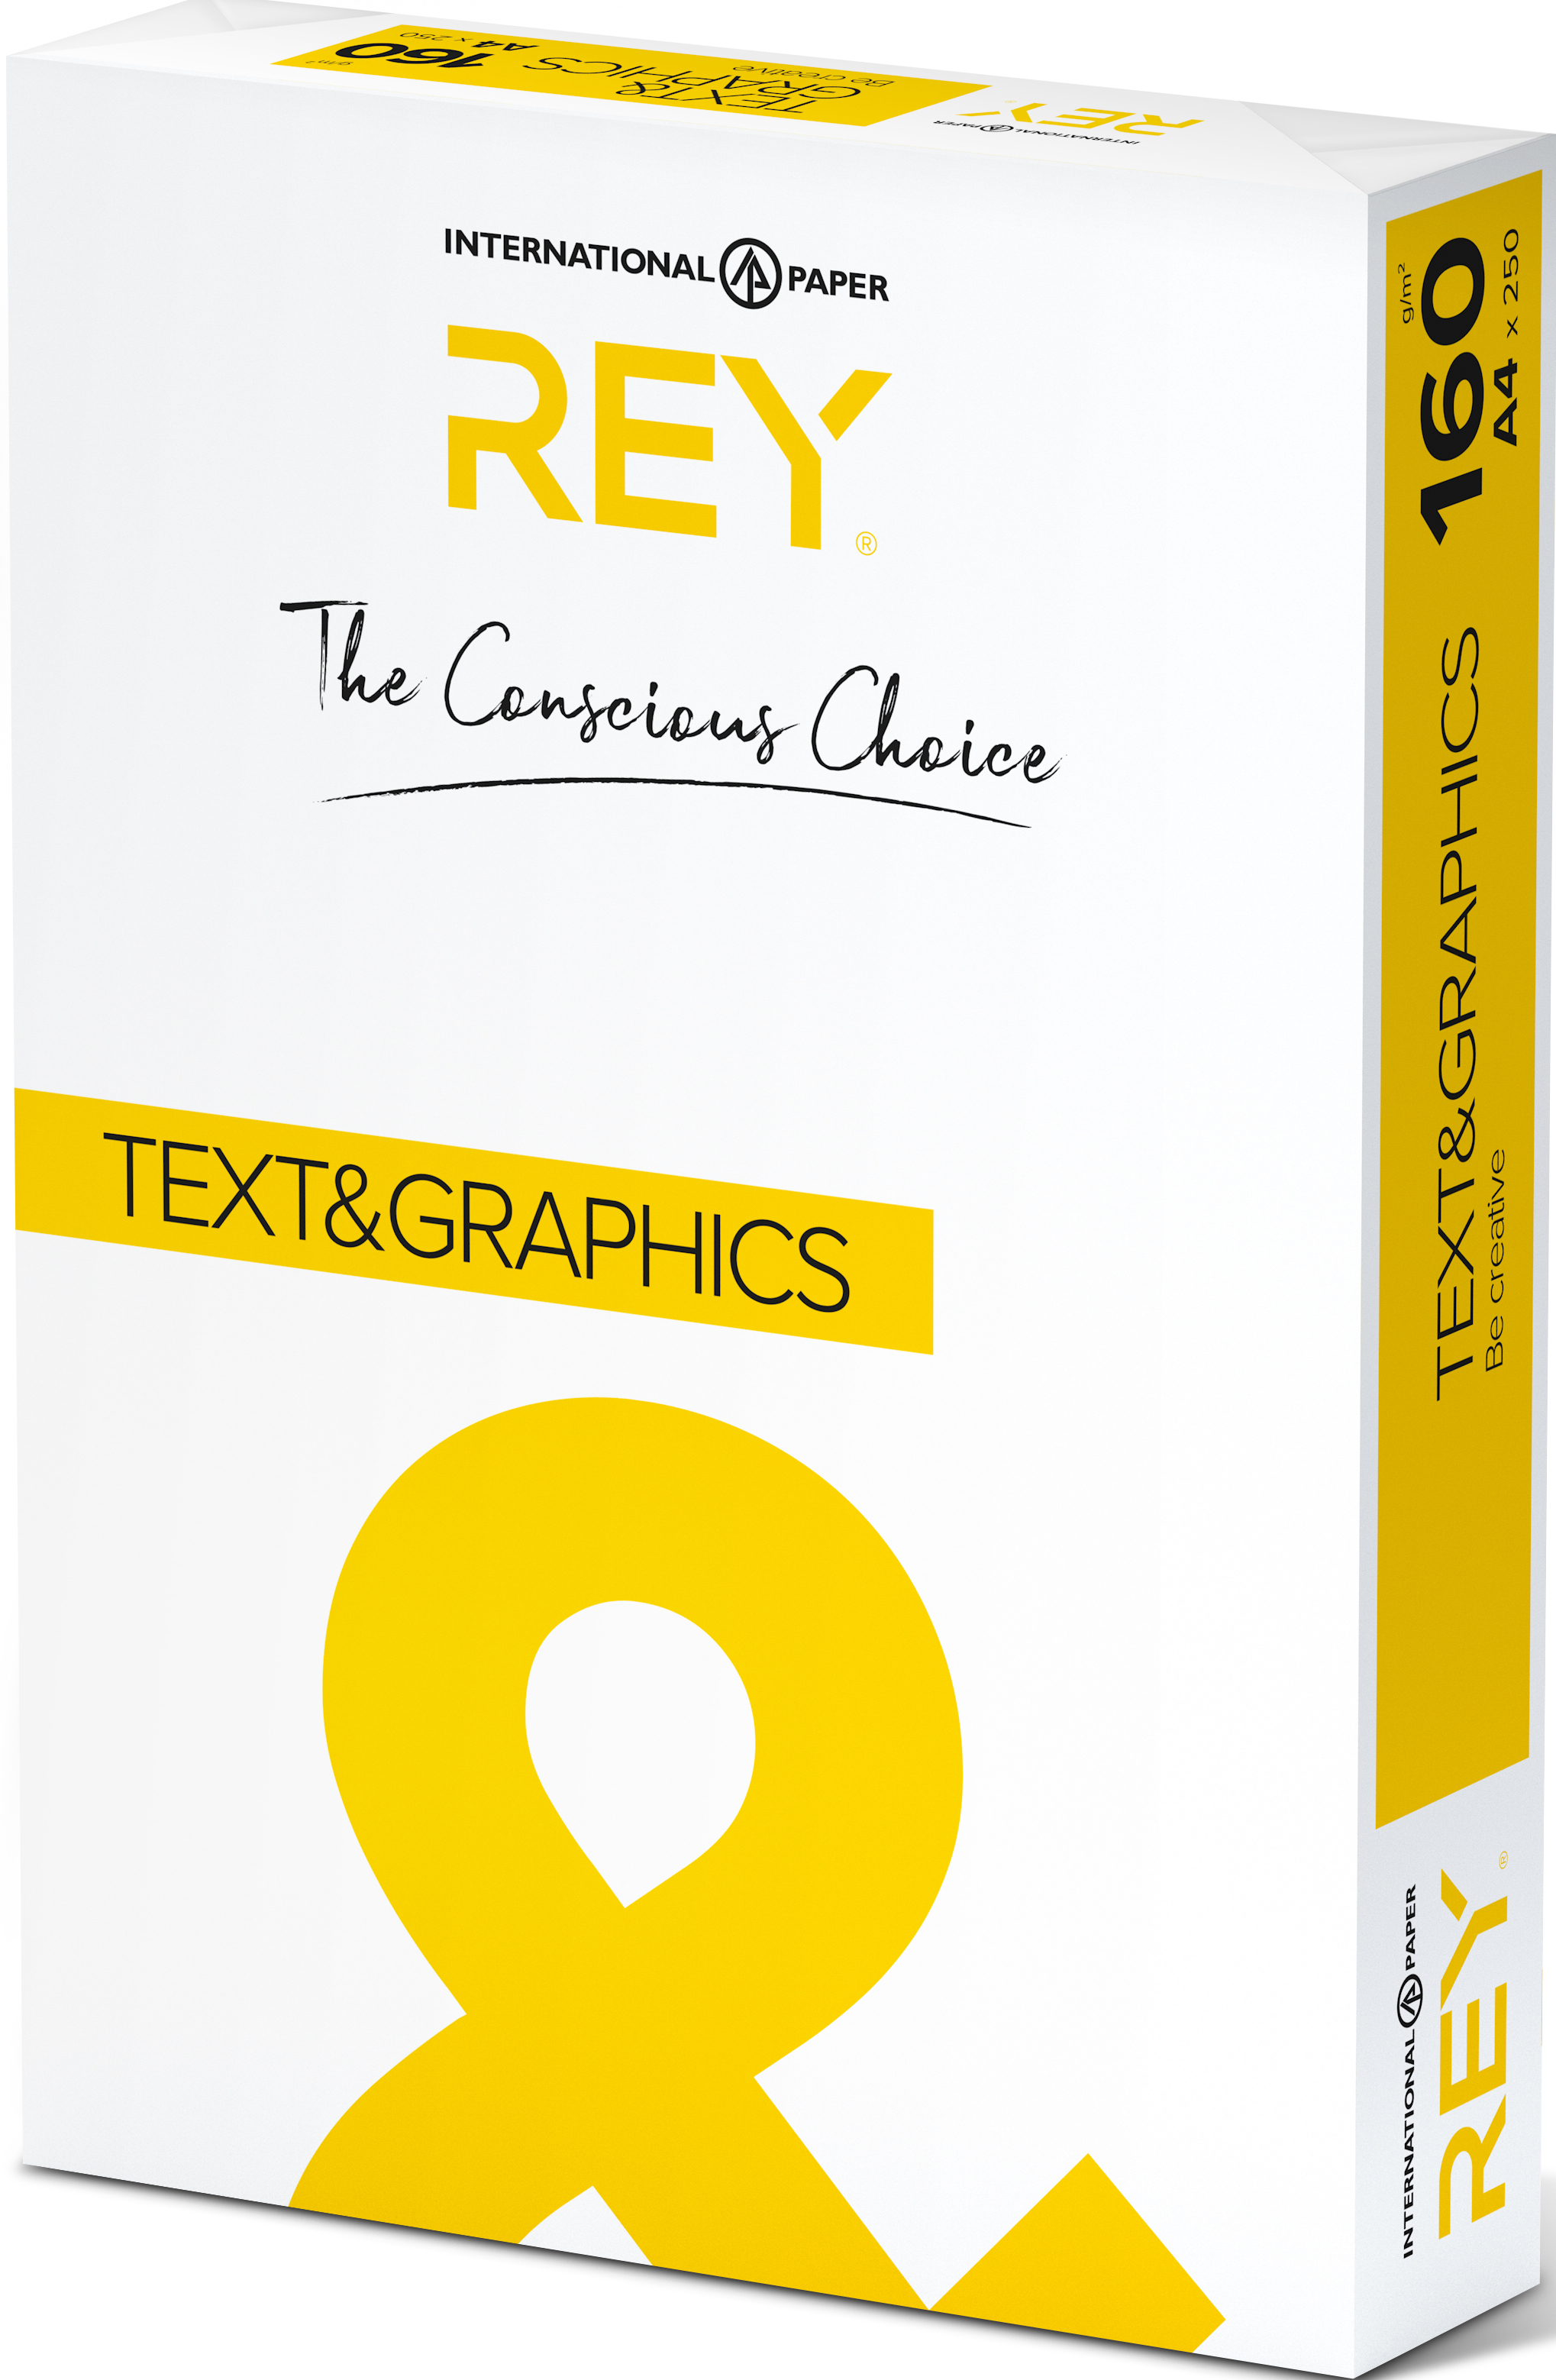 REY Copying Paper Text&Graphics A4 244640 160g pak 250 flls.